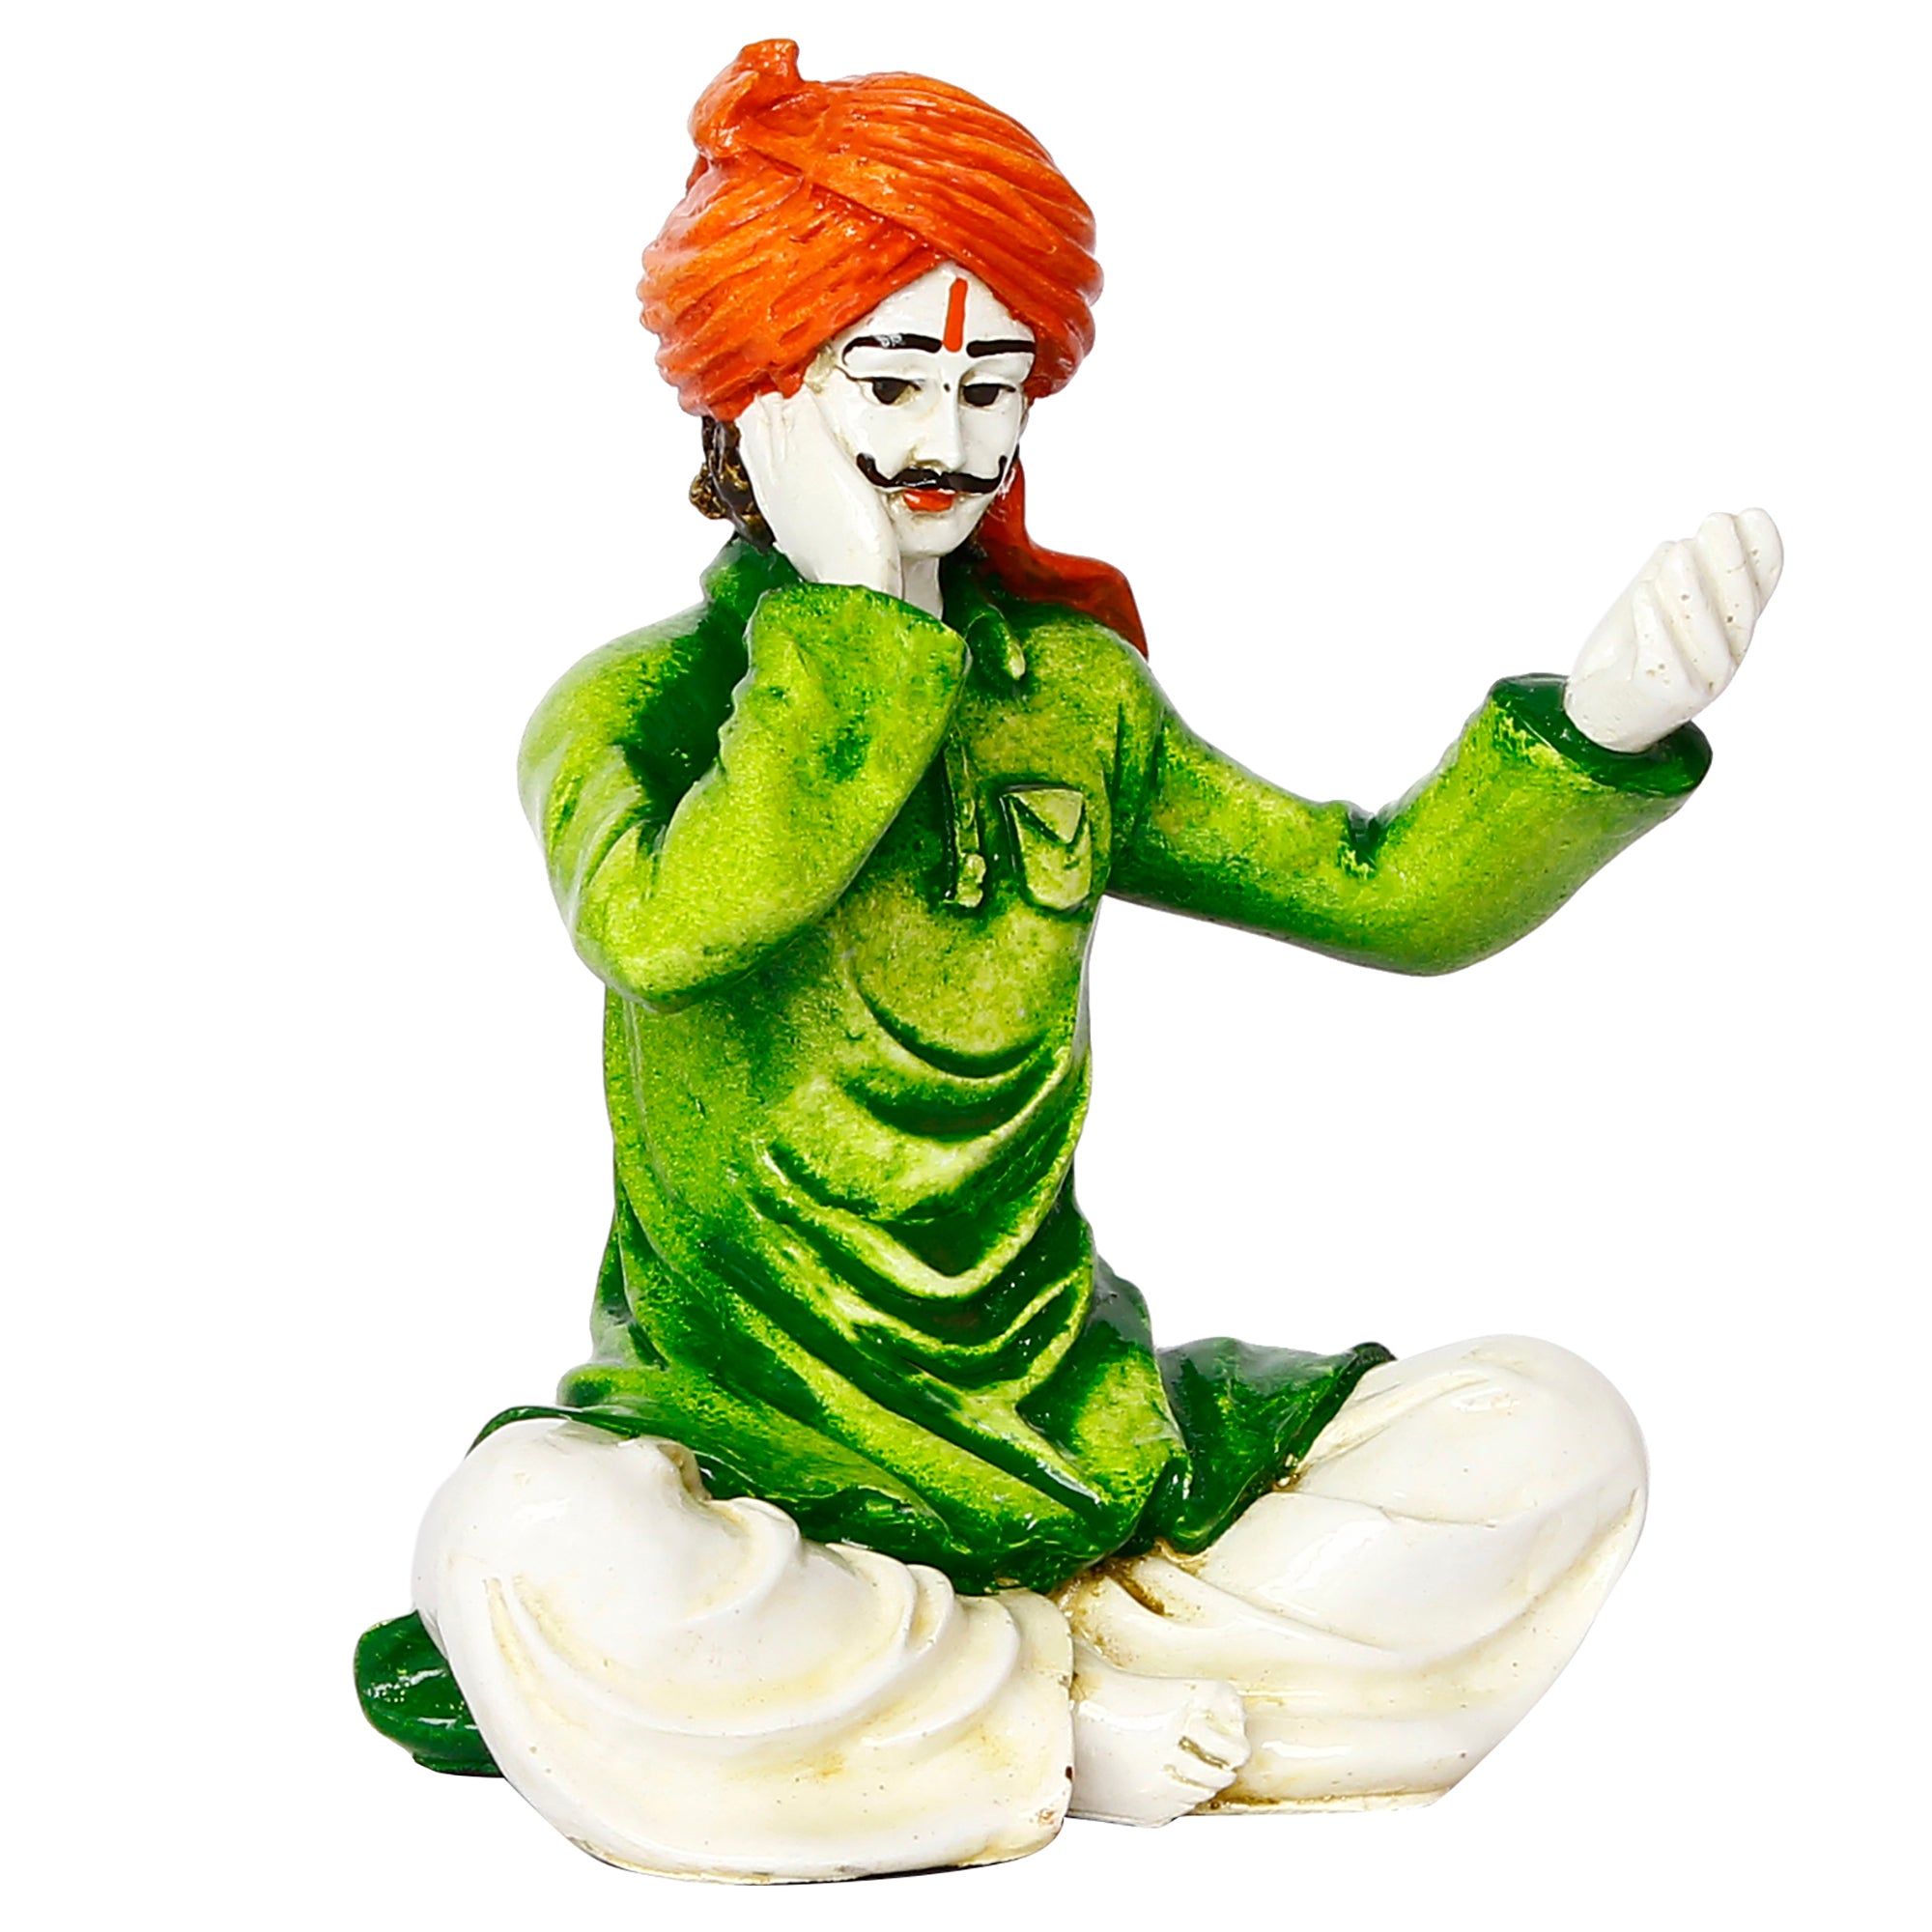 Polyresin Singing Rajasthani Man Statue Handcrafted Human Figurine Decorative Showpiece 4